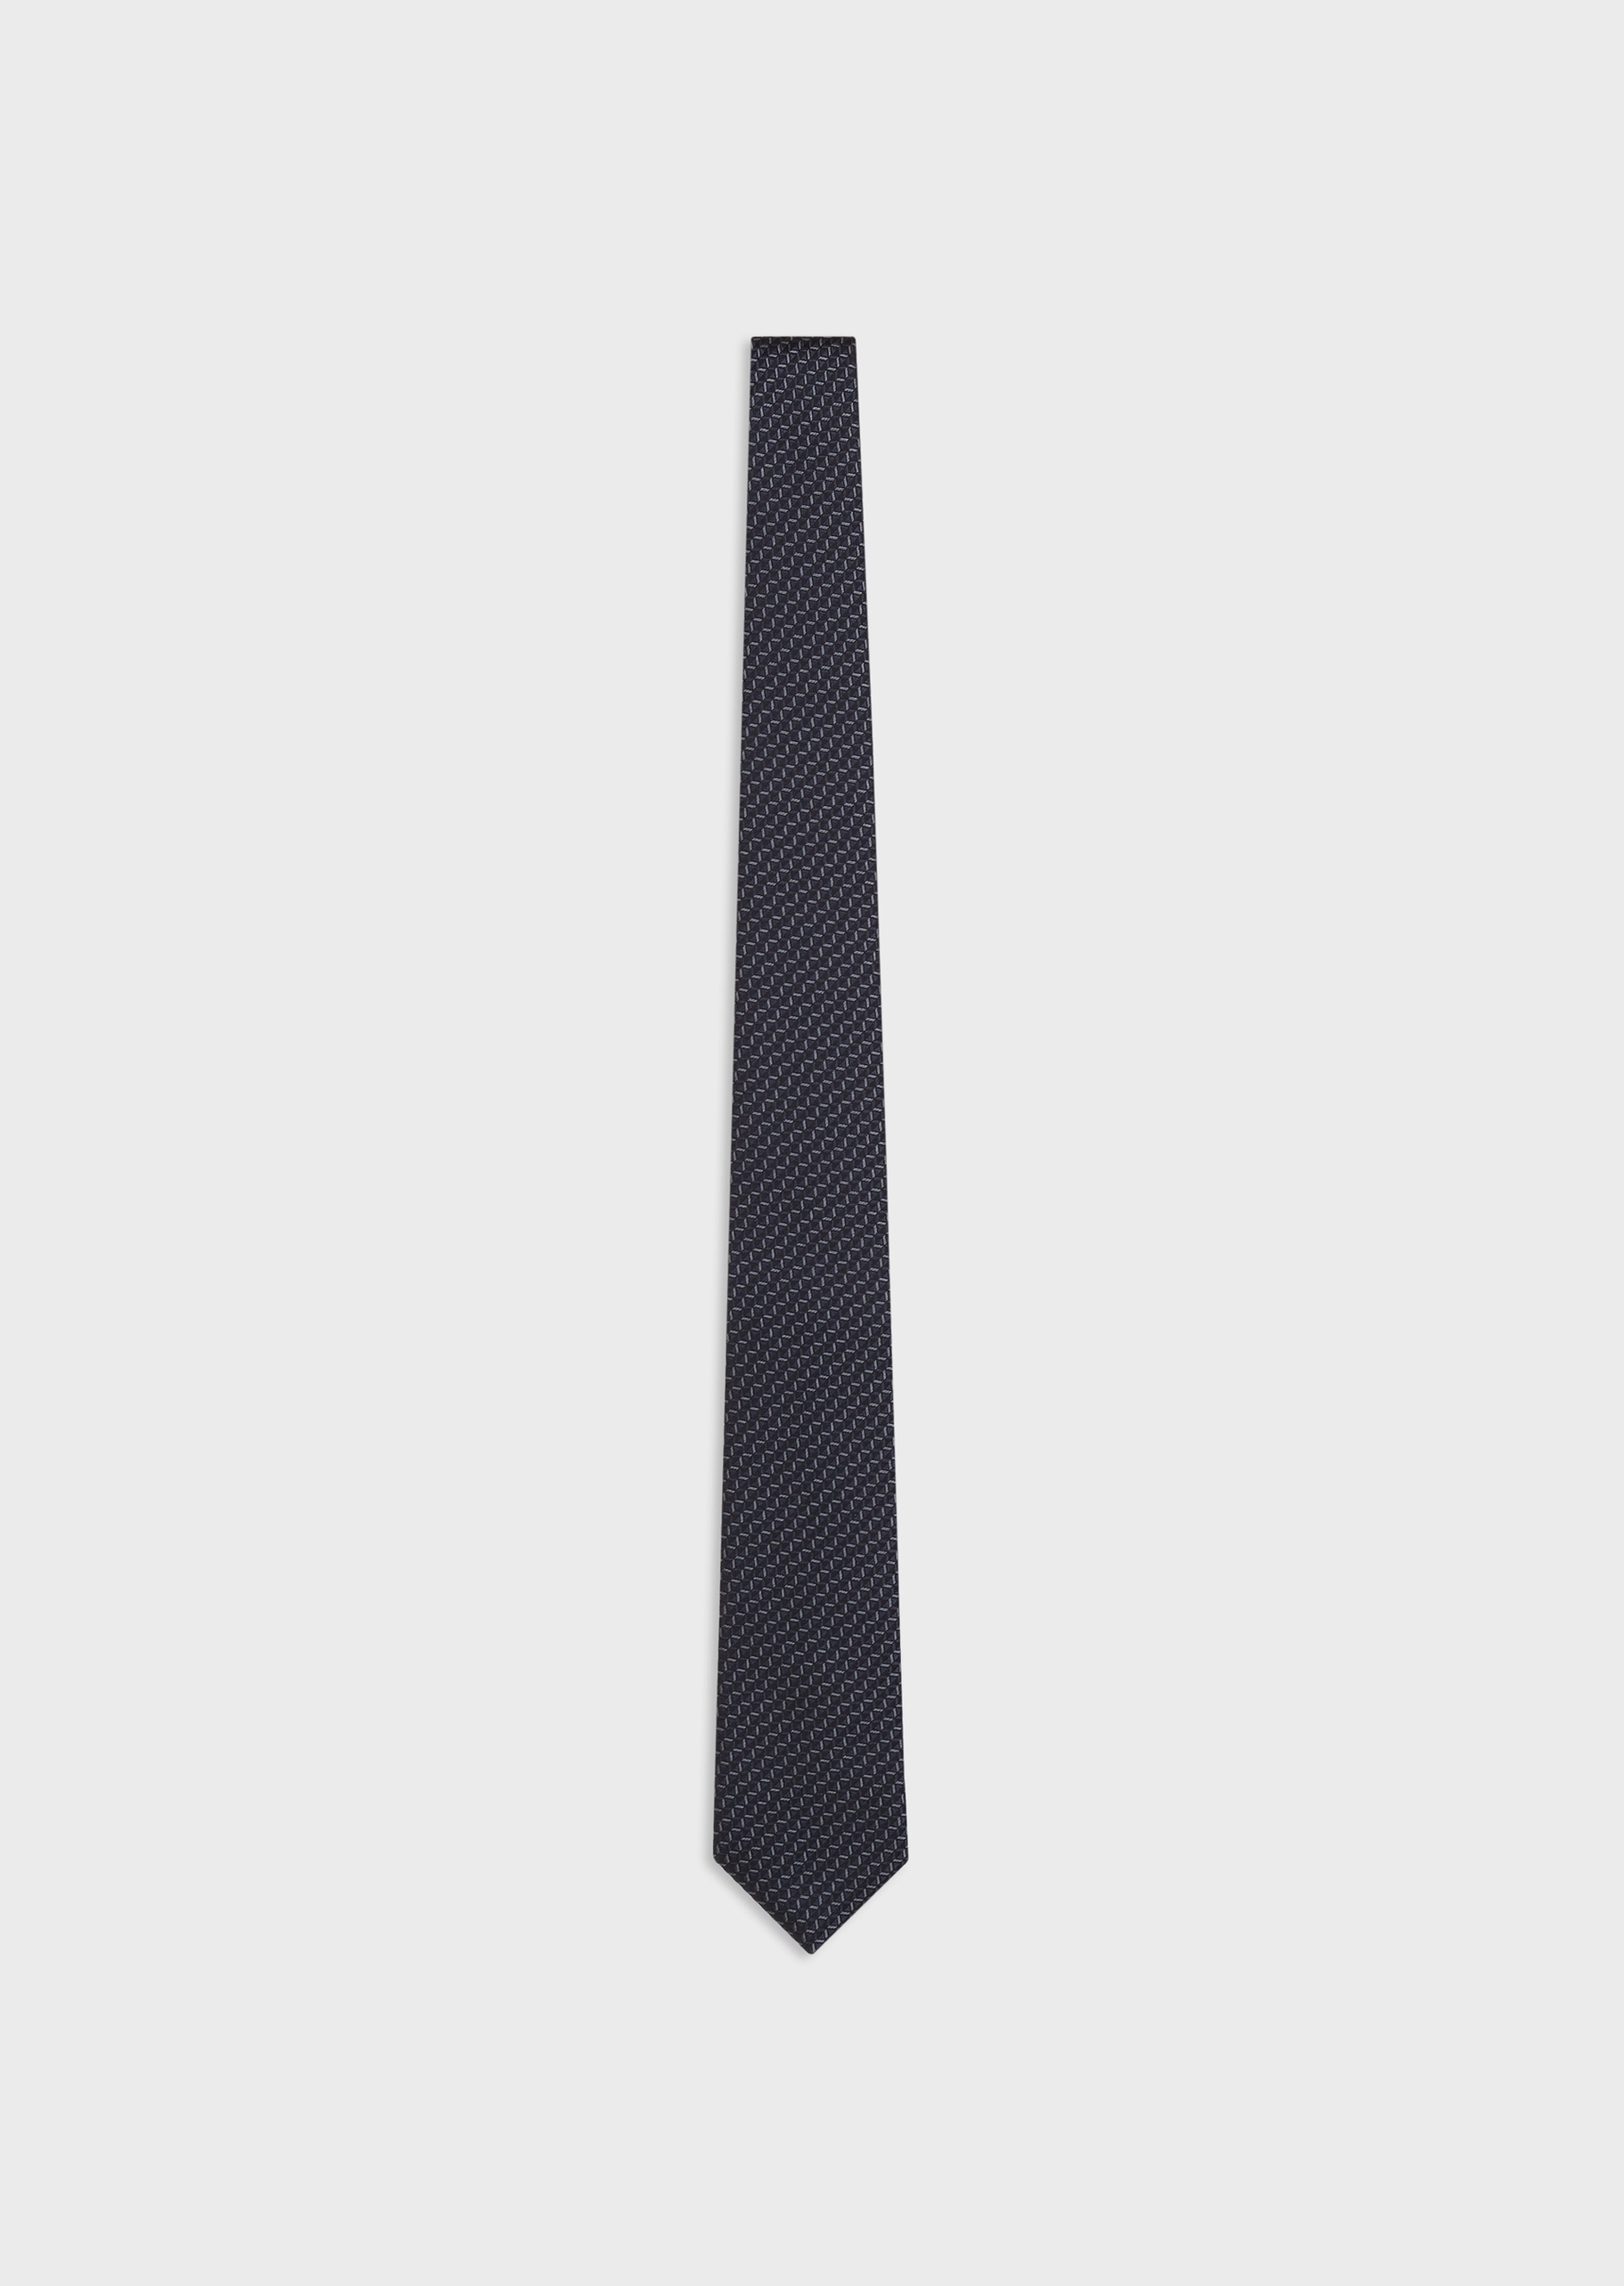 Giorgio Armani 几何提花图案领带